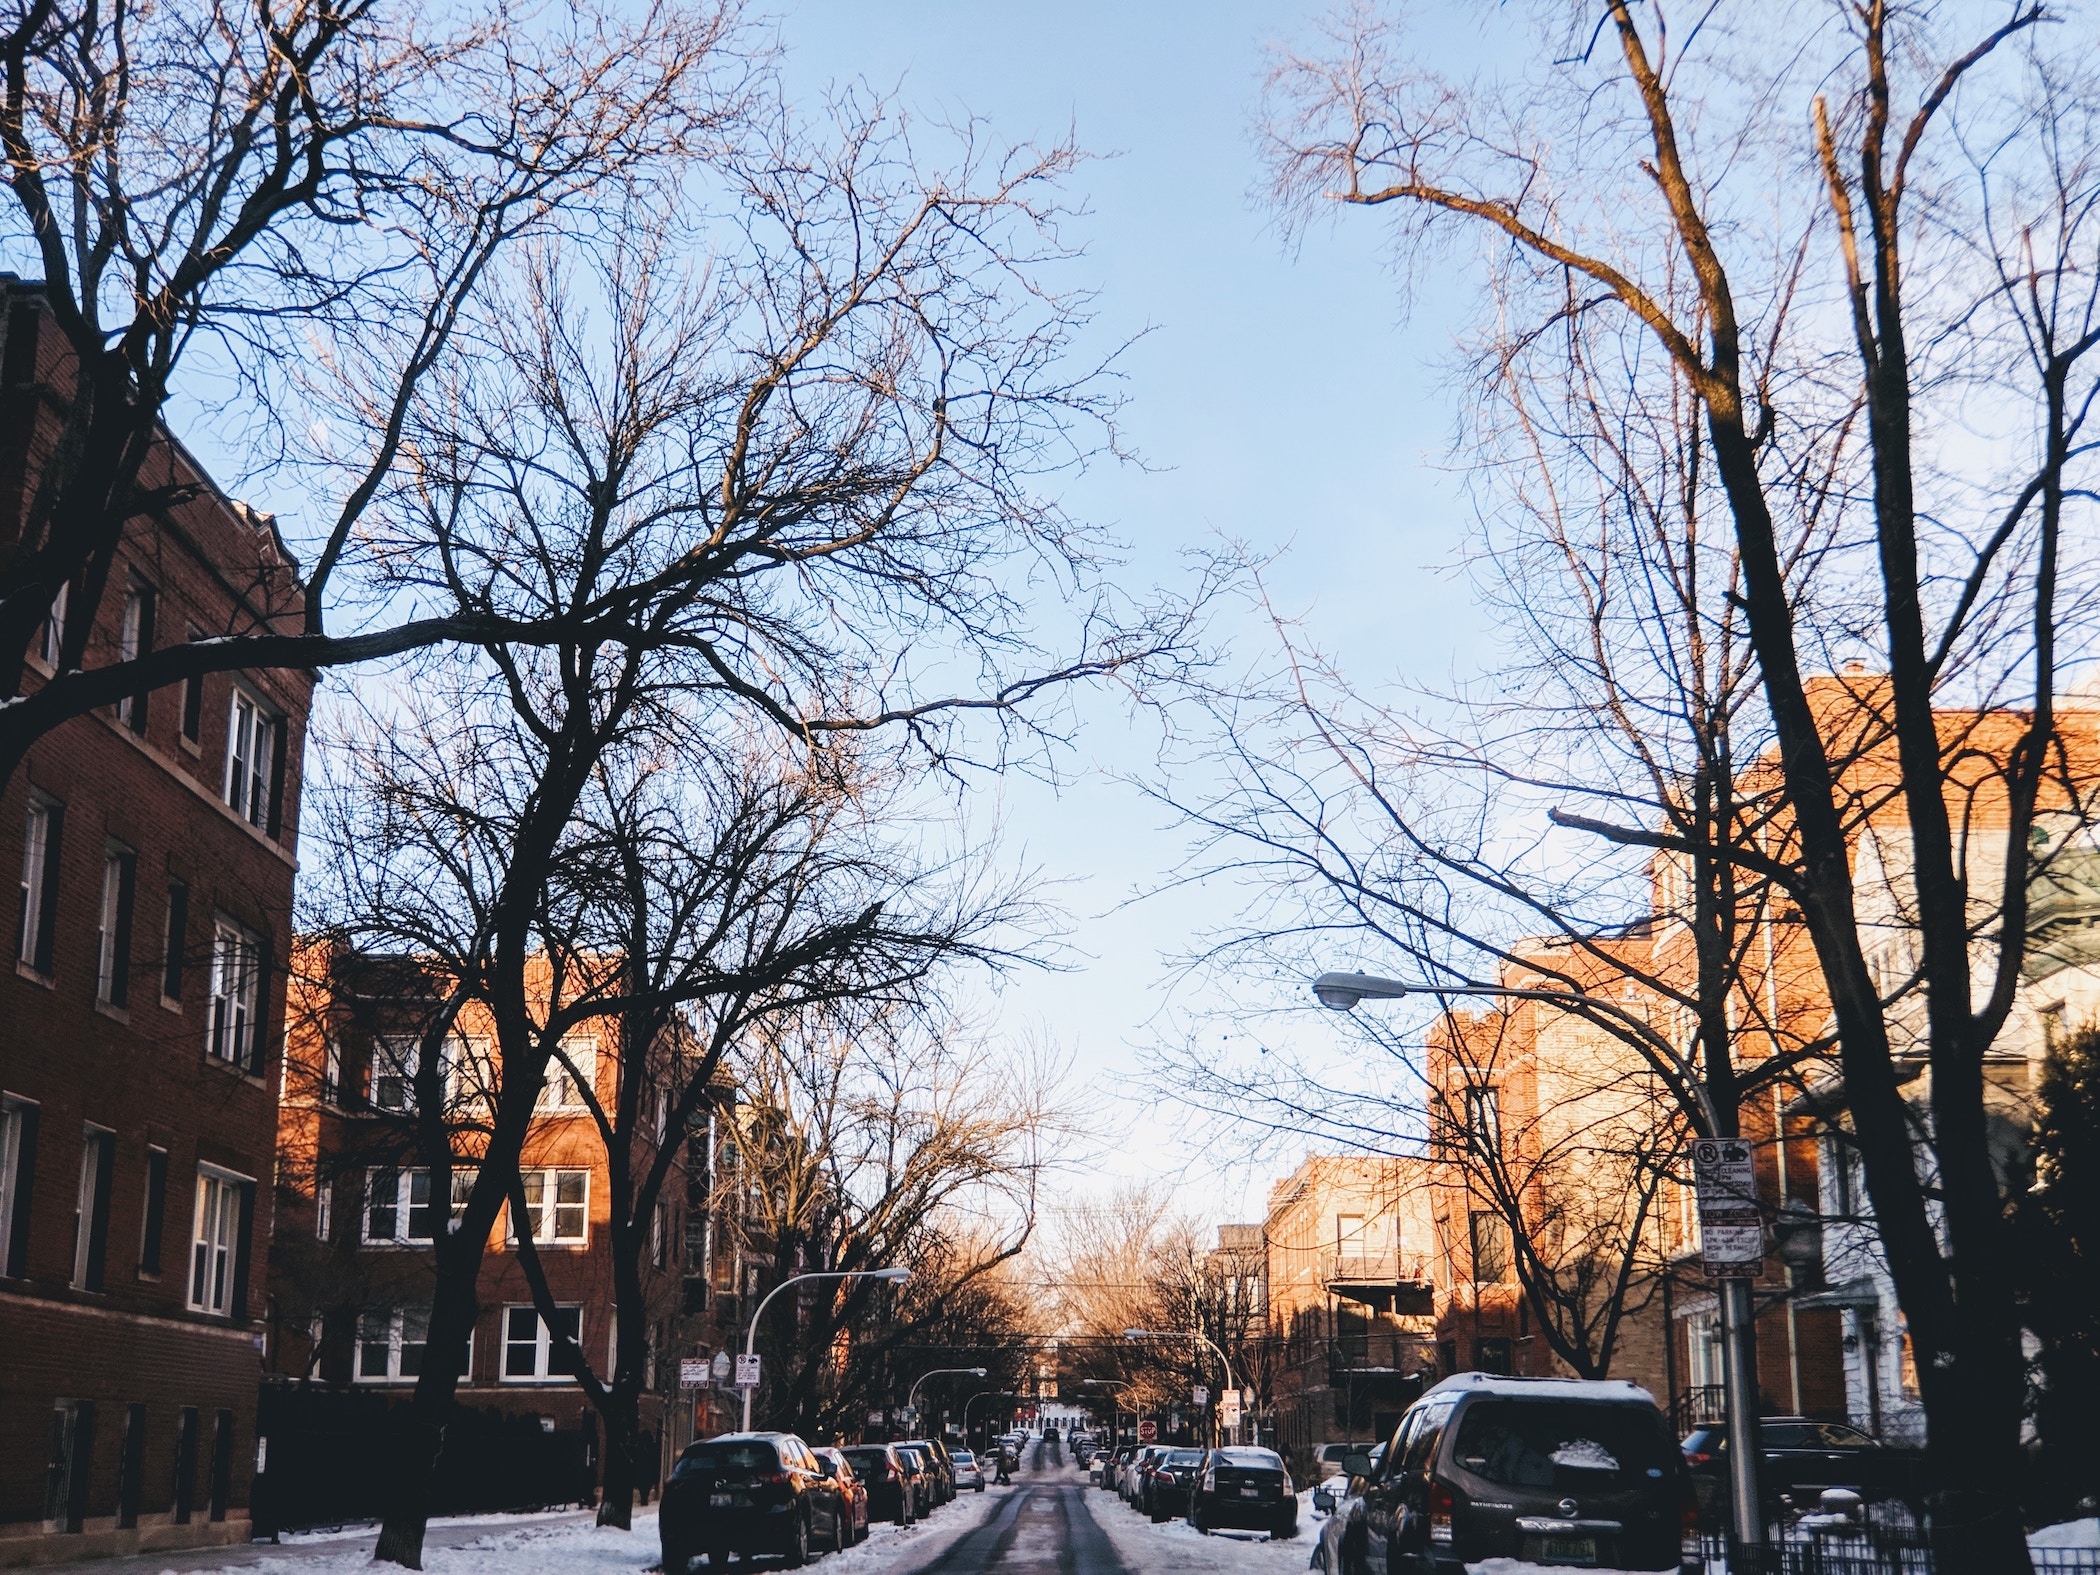 Chicago residential street in winter